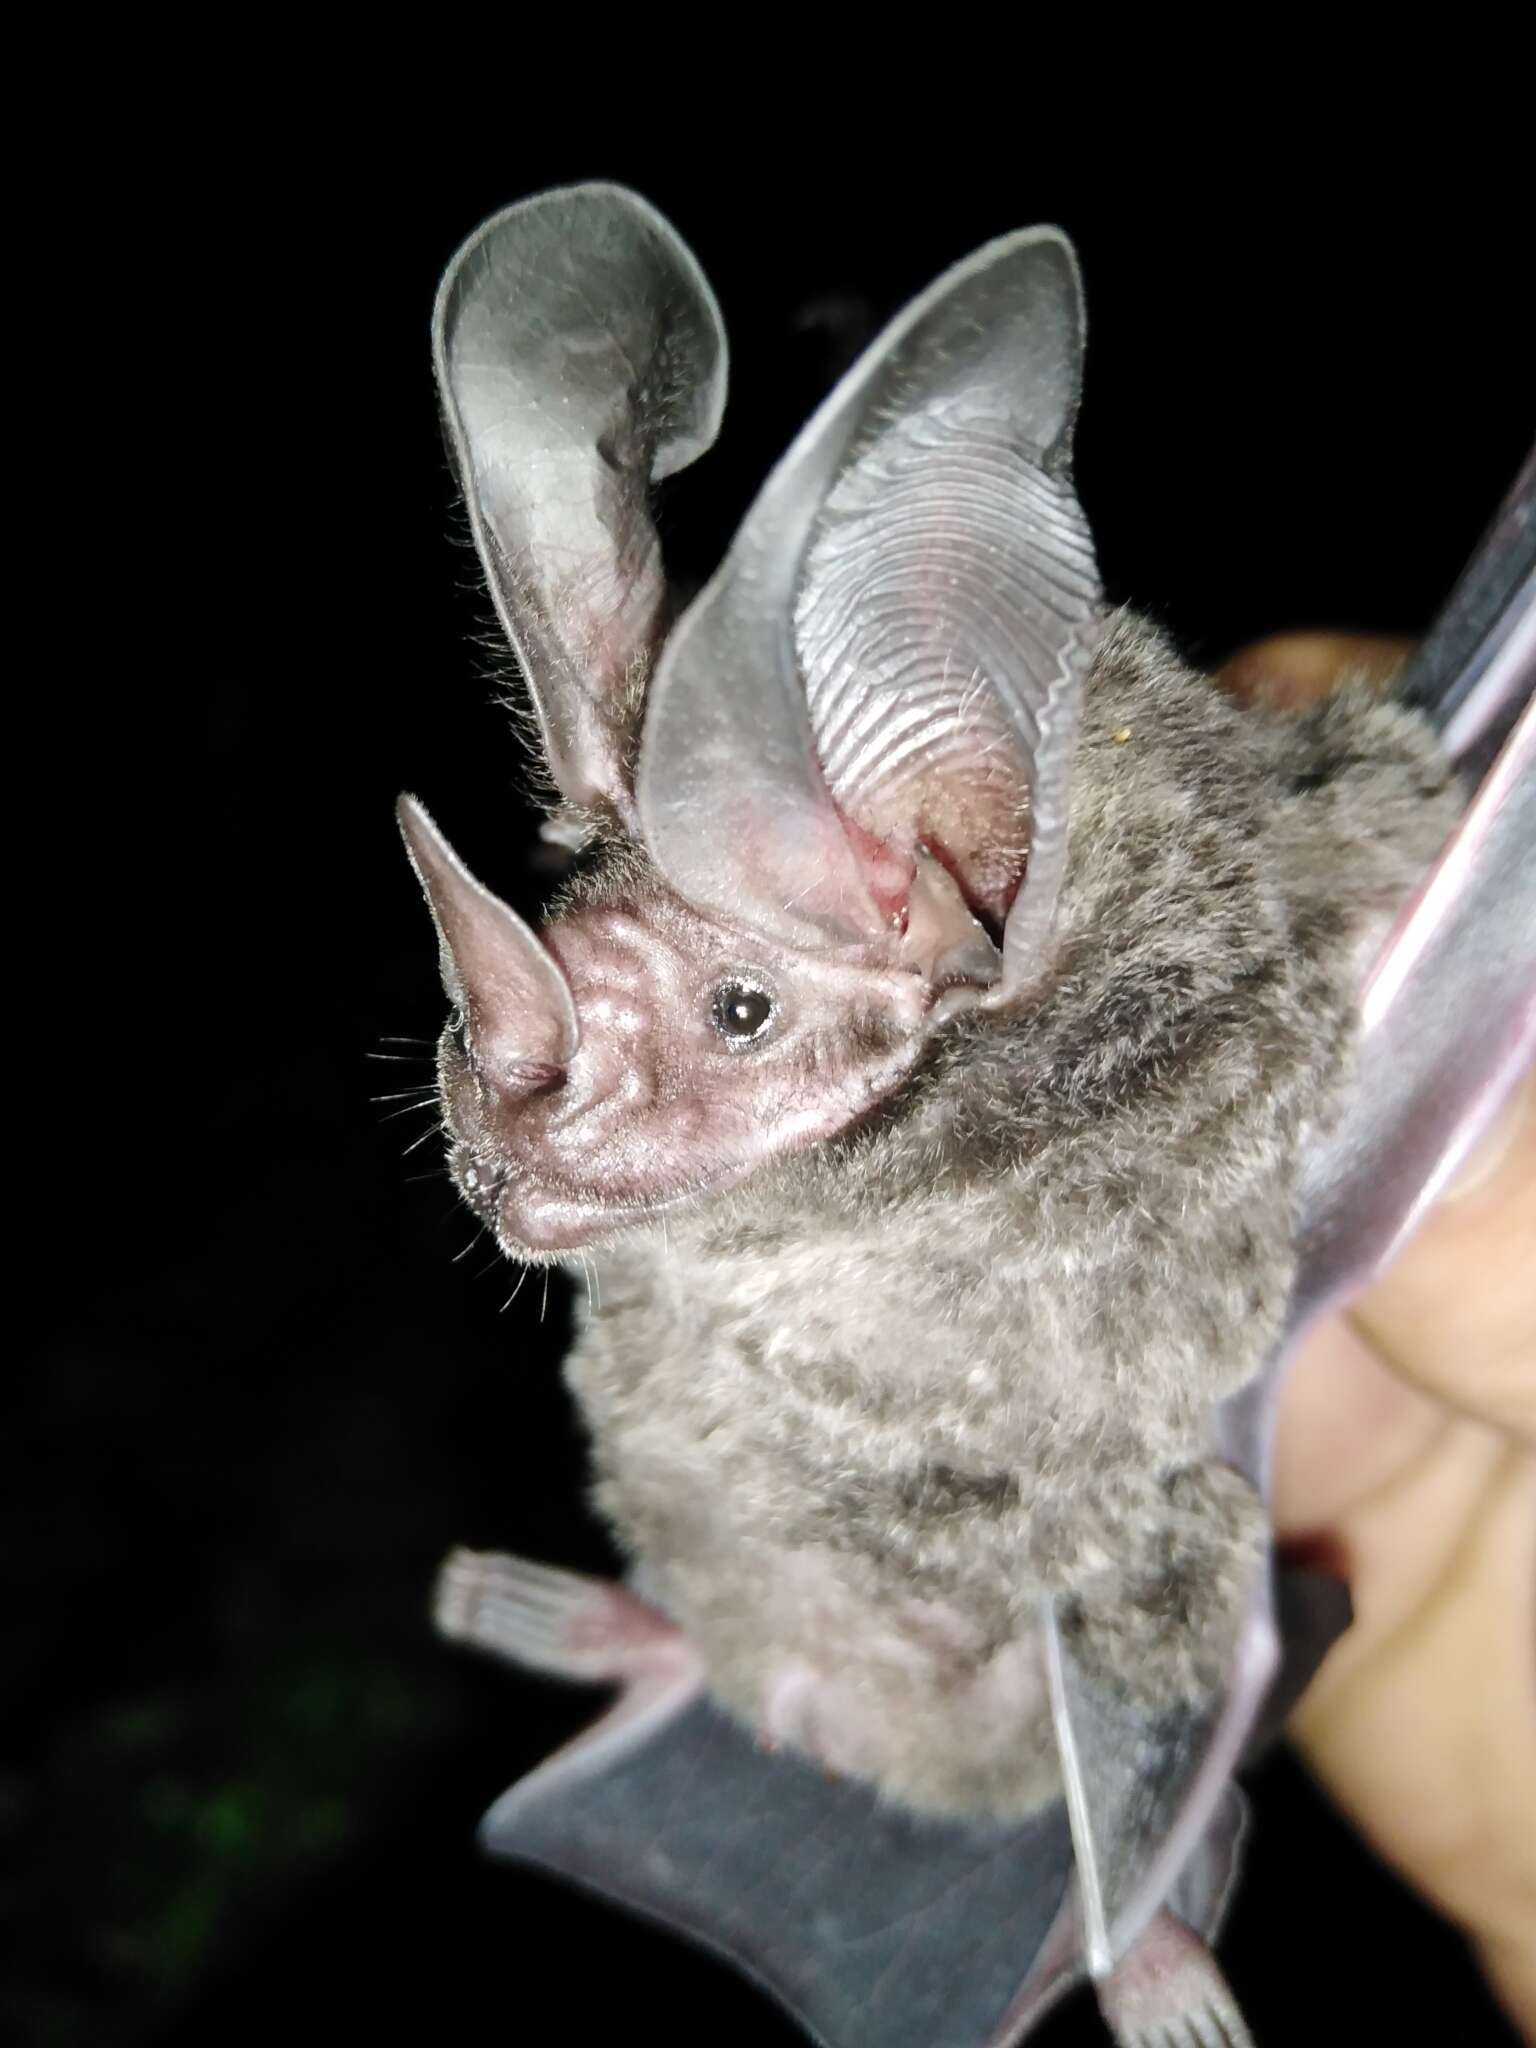 Image of pygmy round-eared bat